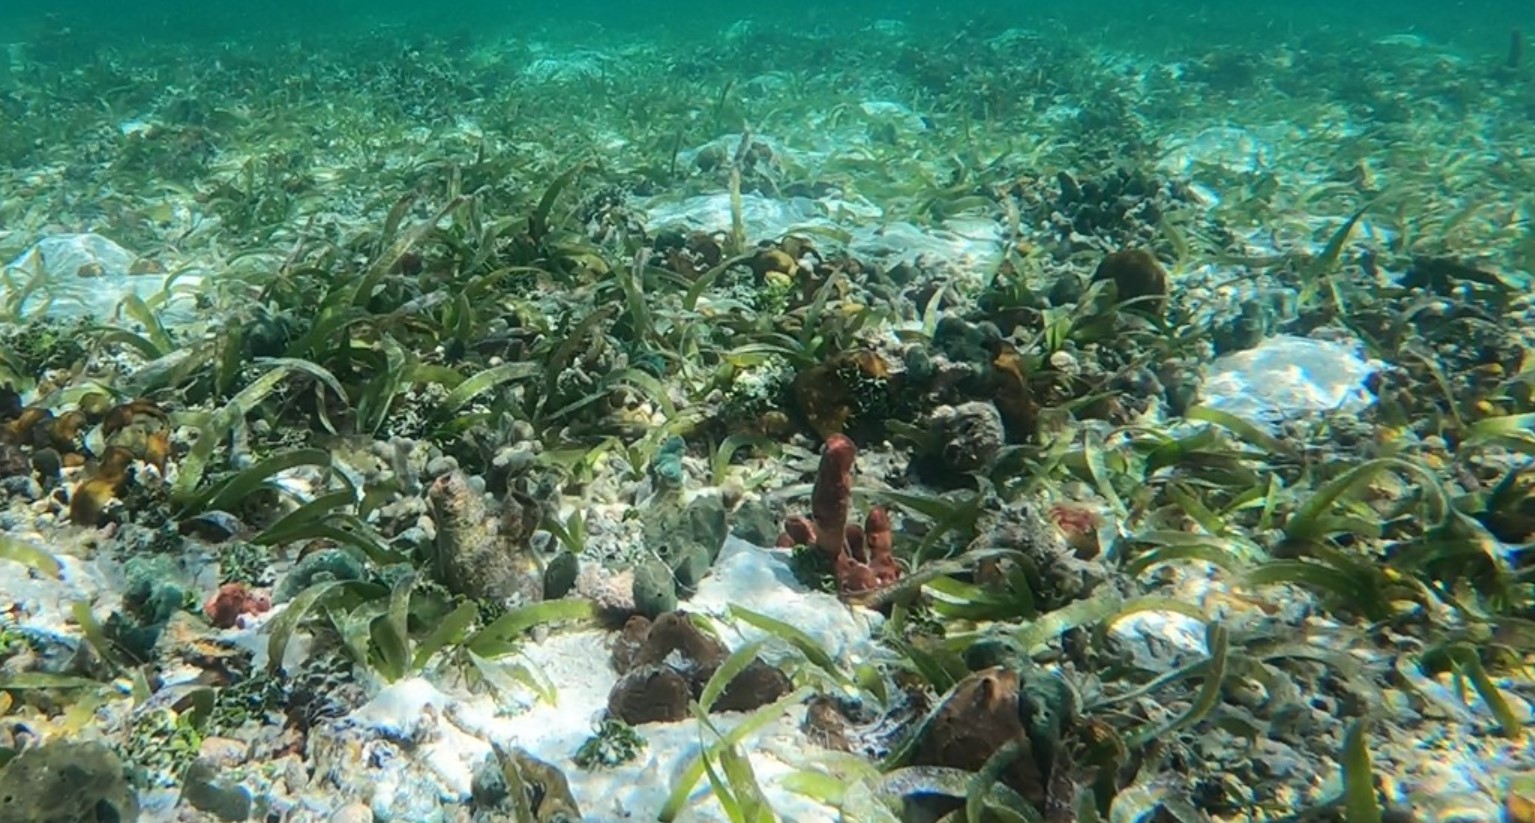 Panamá da pasos para medir el carbono azul de sus manglares, clave contra crisis climática